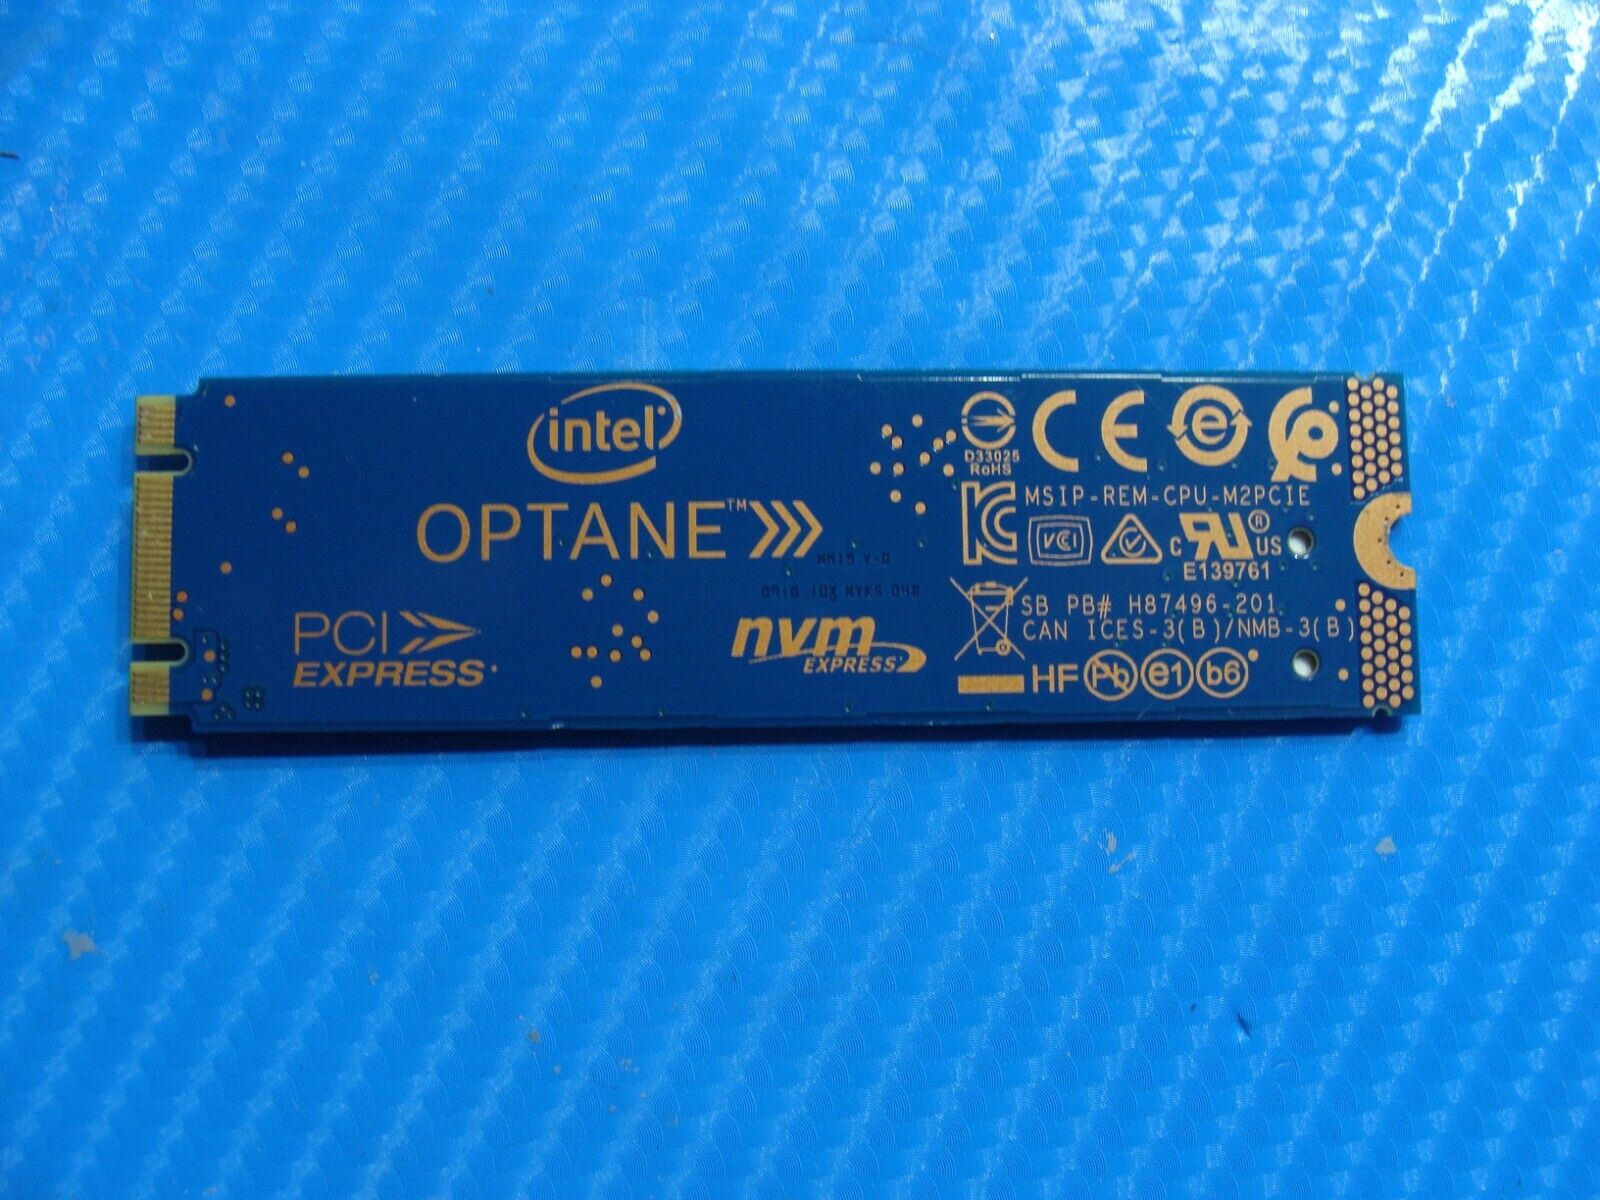 Lenovo Y530-15ICH Intel 16GB SATA M.2 SSD Solid State Drive MEMPEK1J016GAL